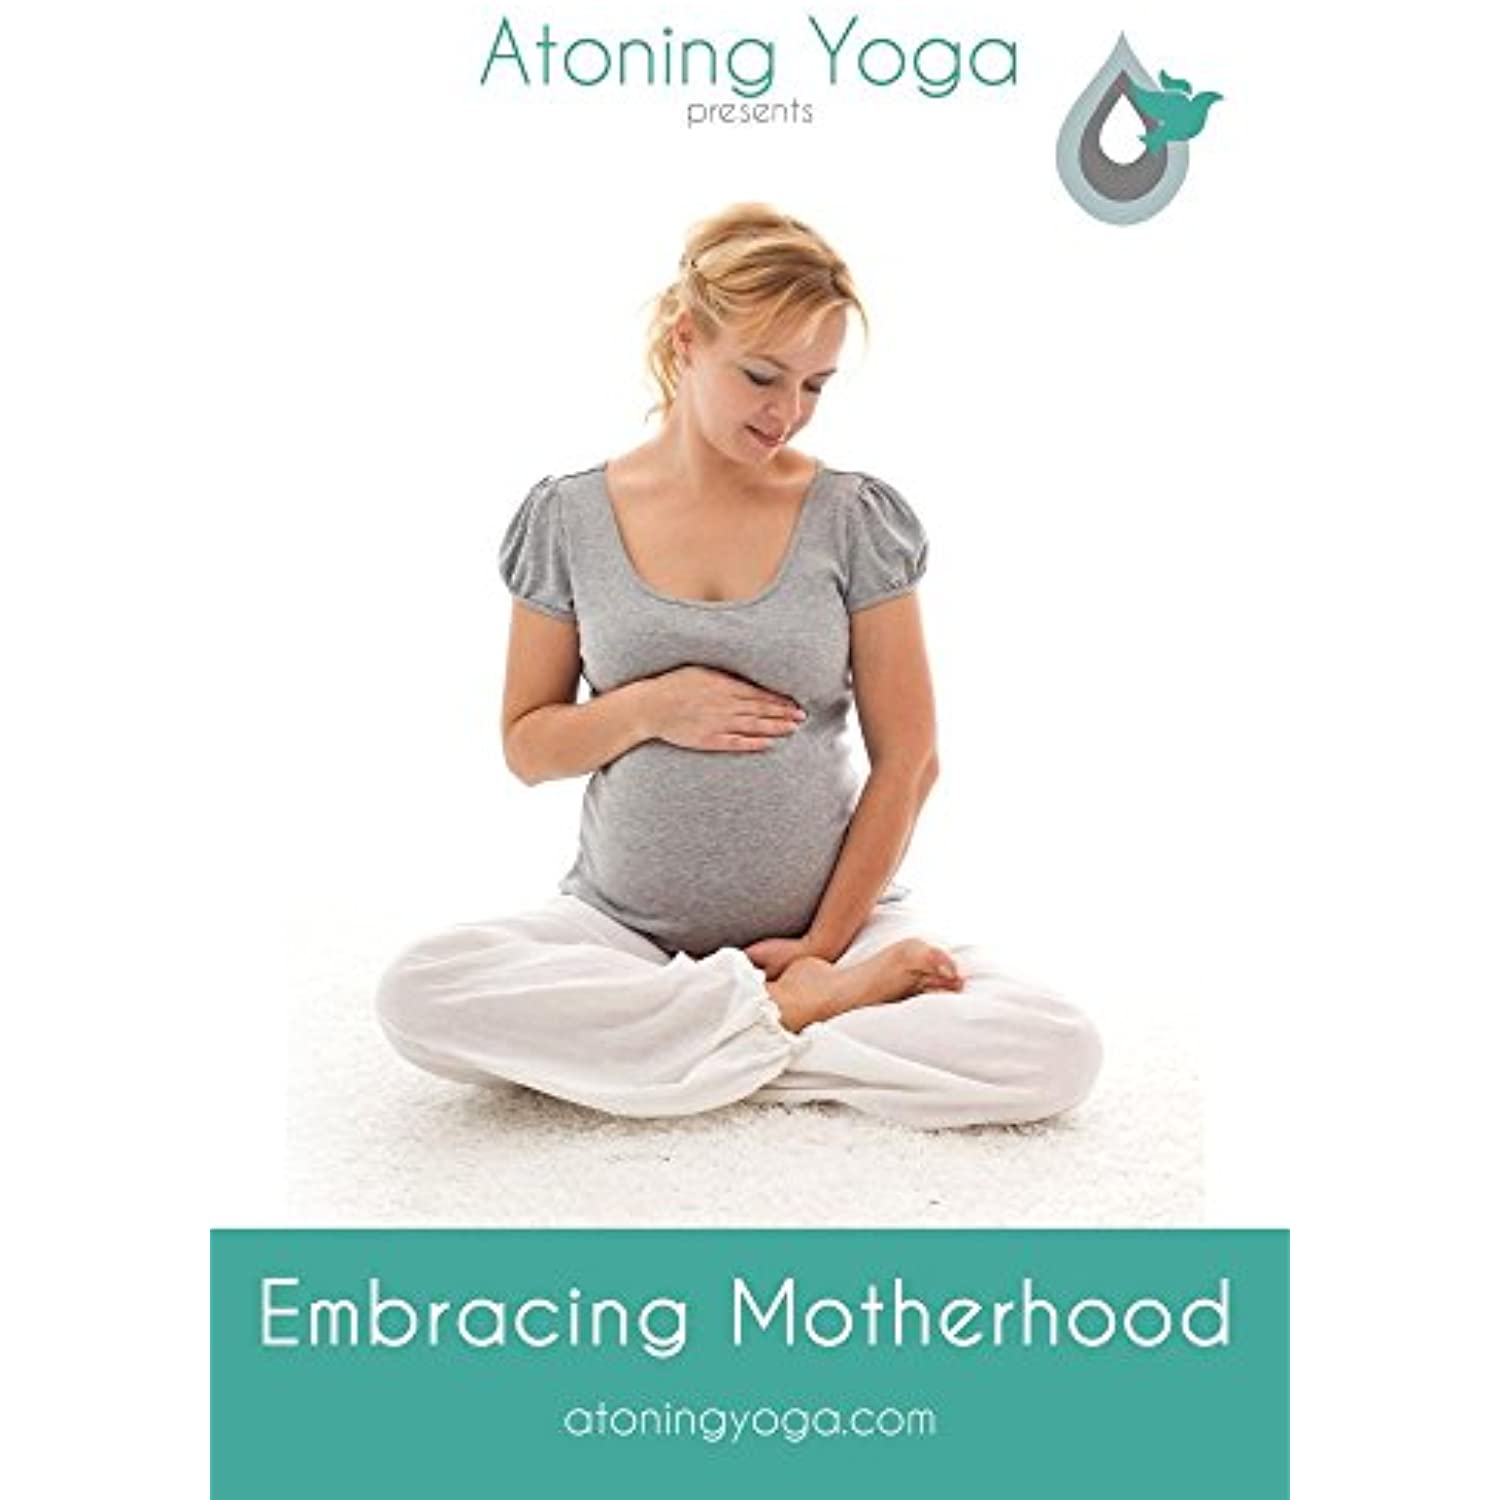 Atoning Yoga Embracing Motherhood DVD